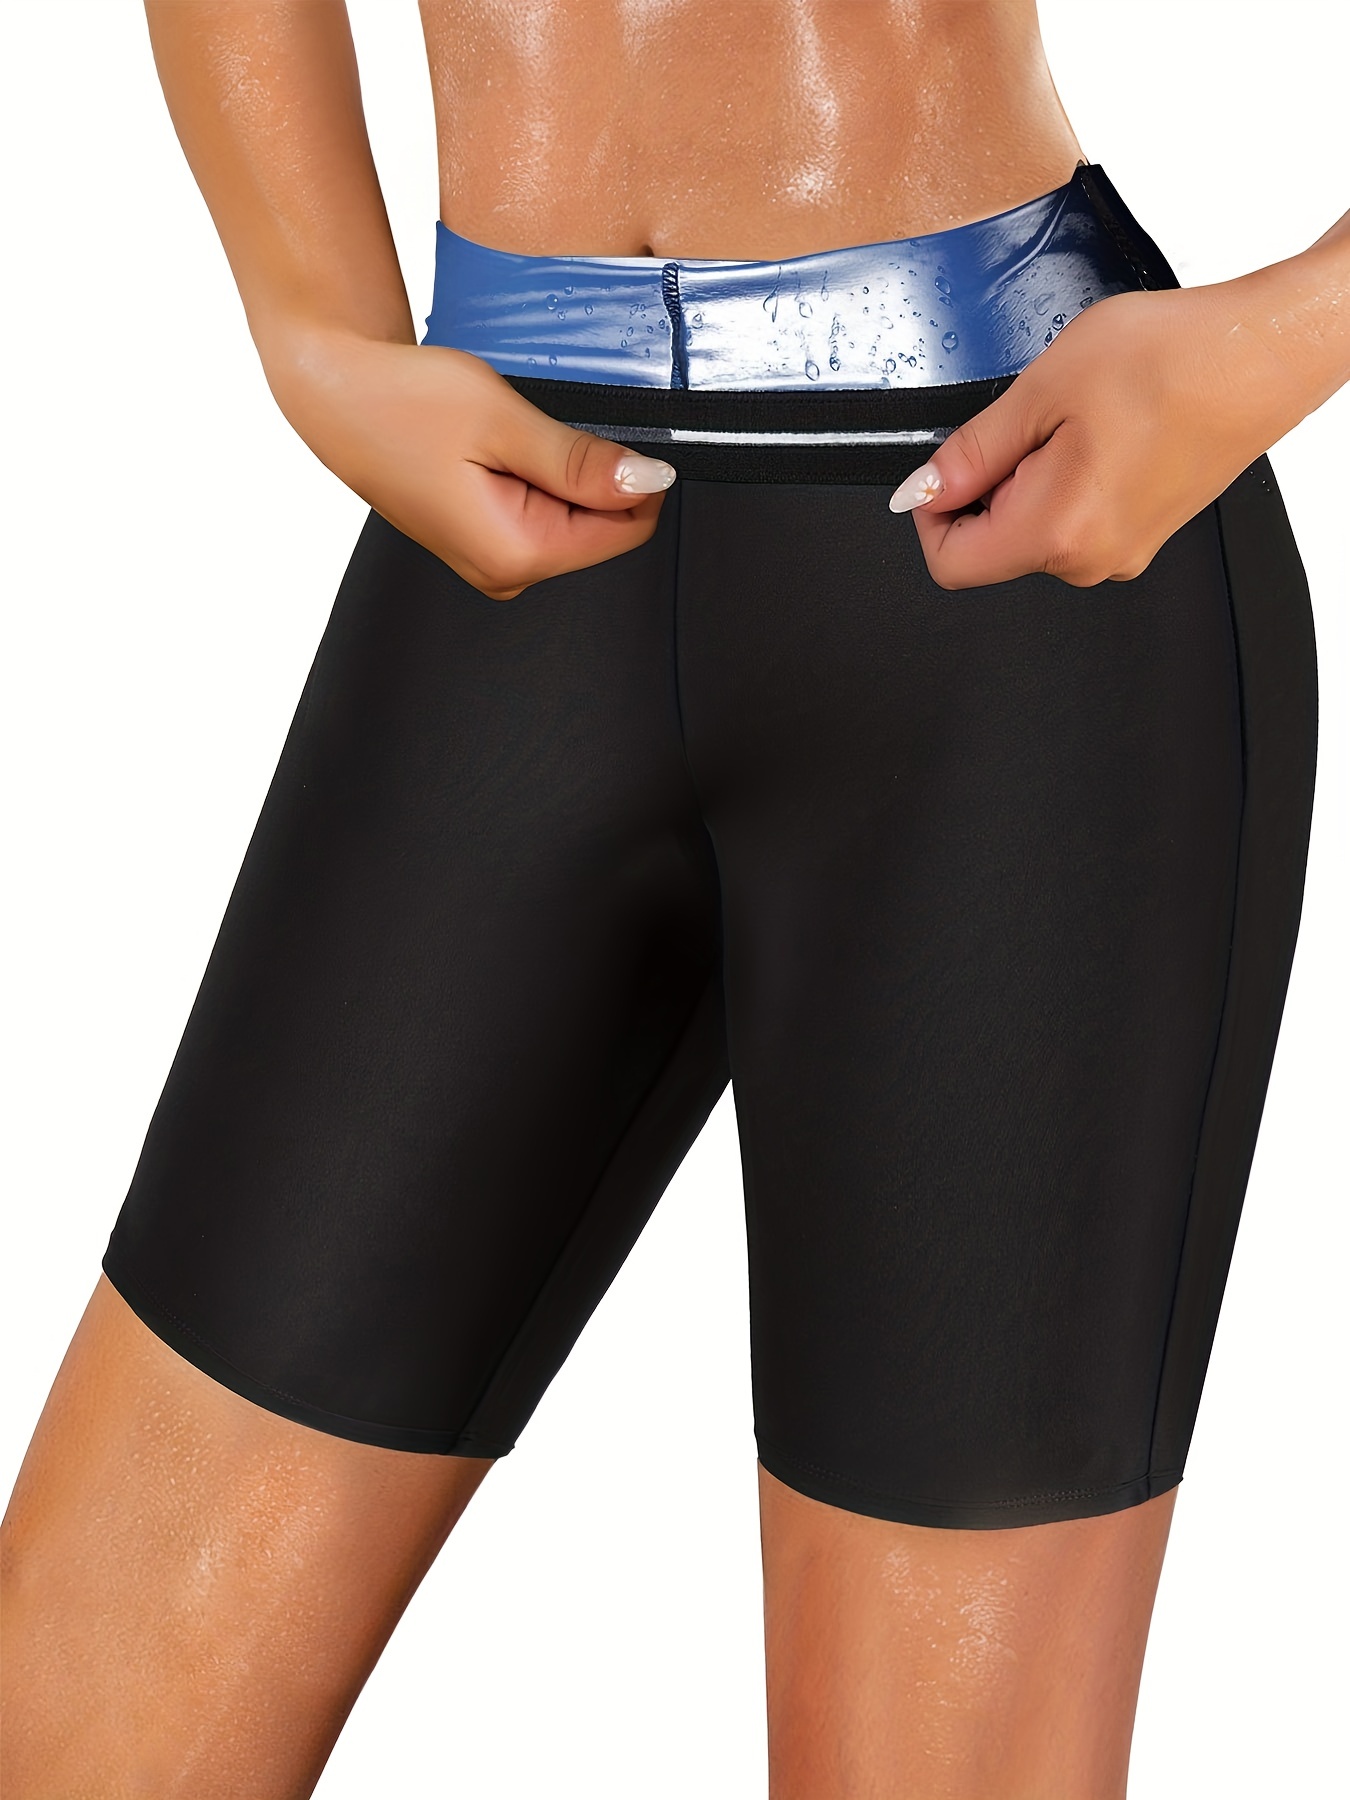 Sauna Sweat Pants For Women High Waisted Slimming Shorts Hot